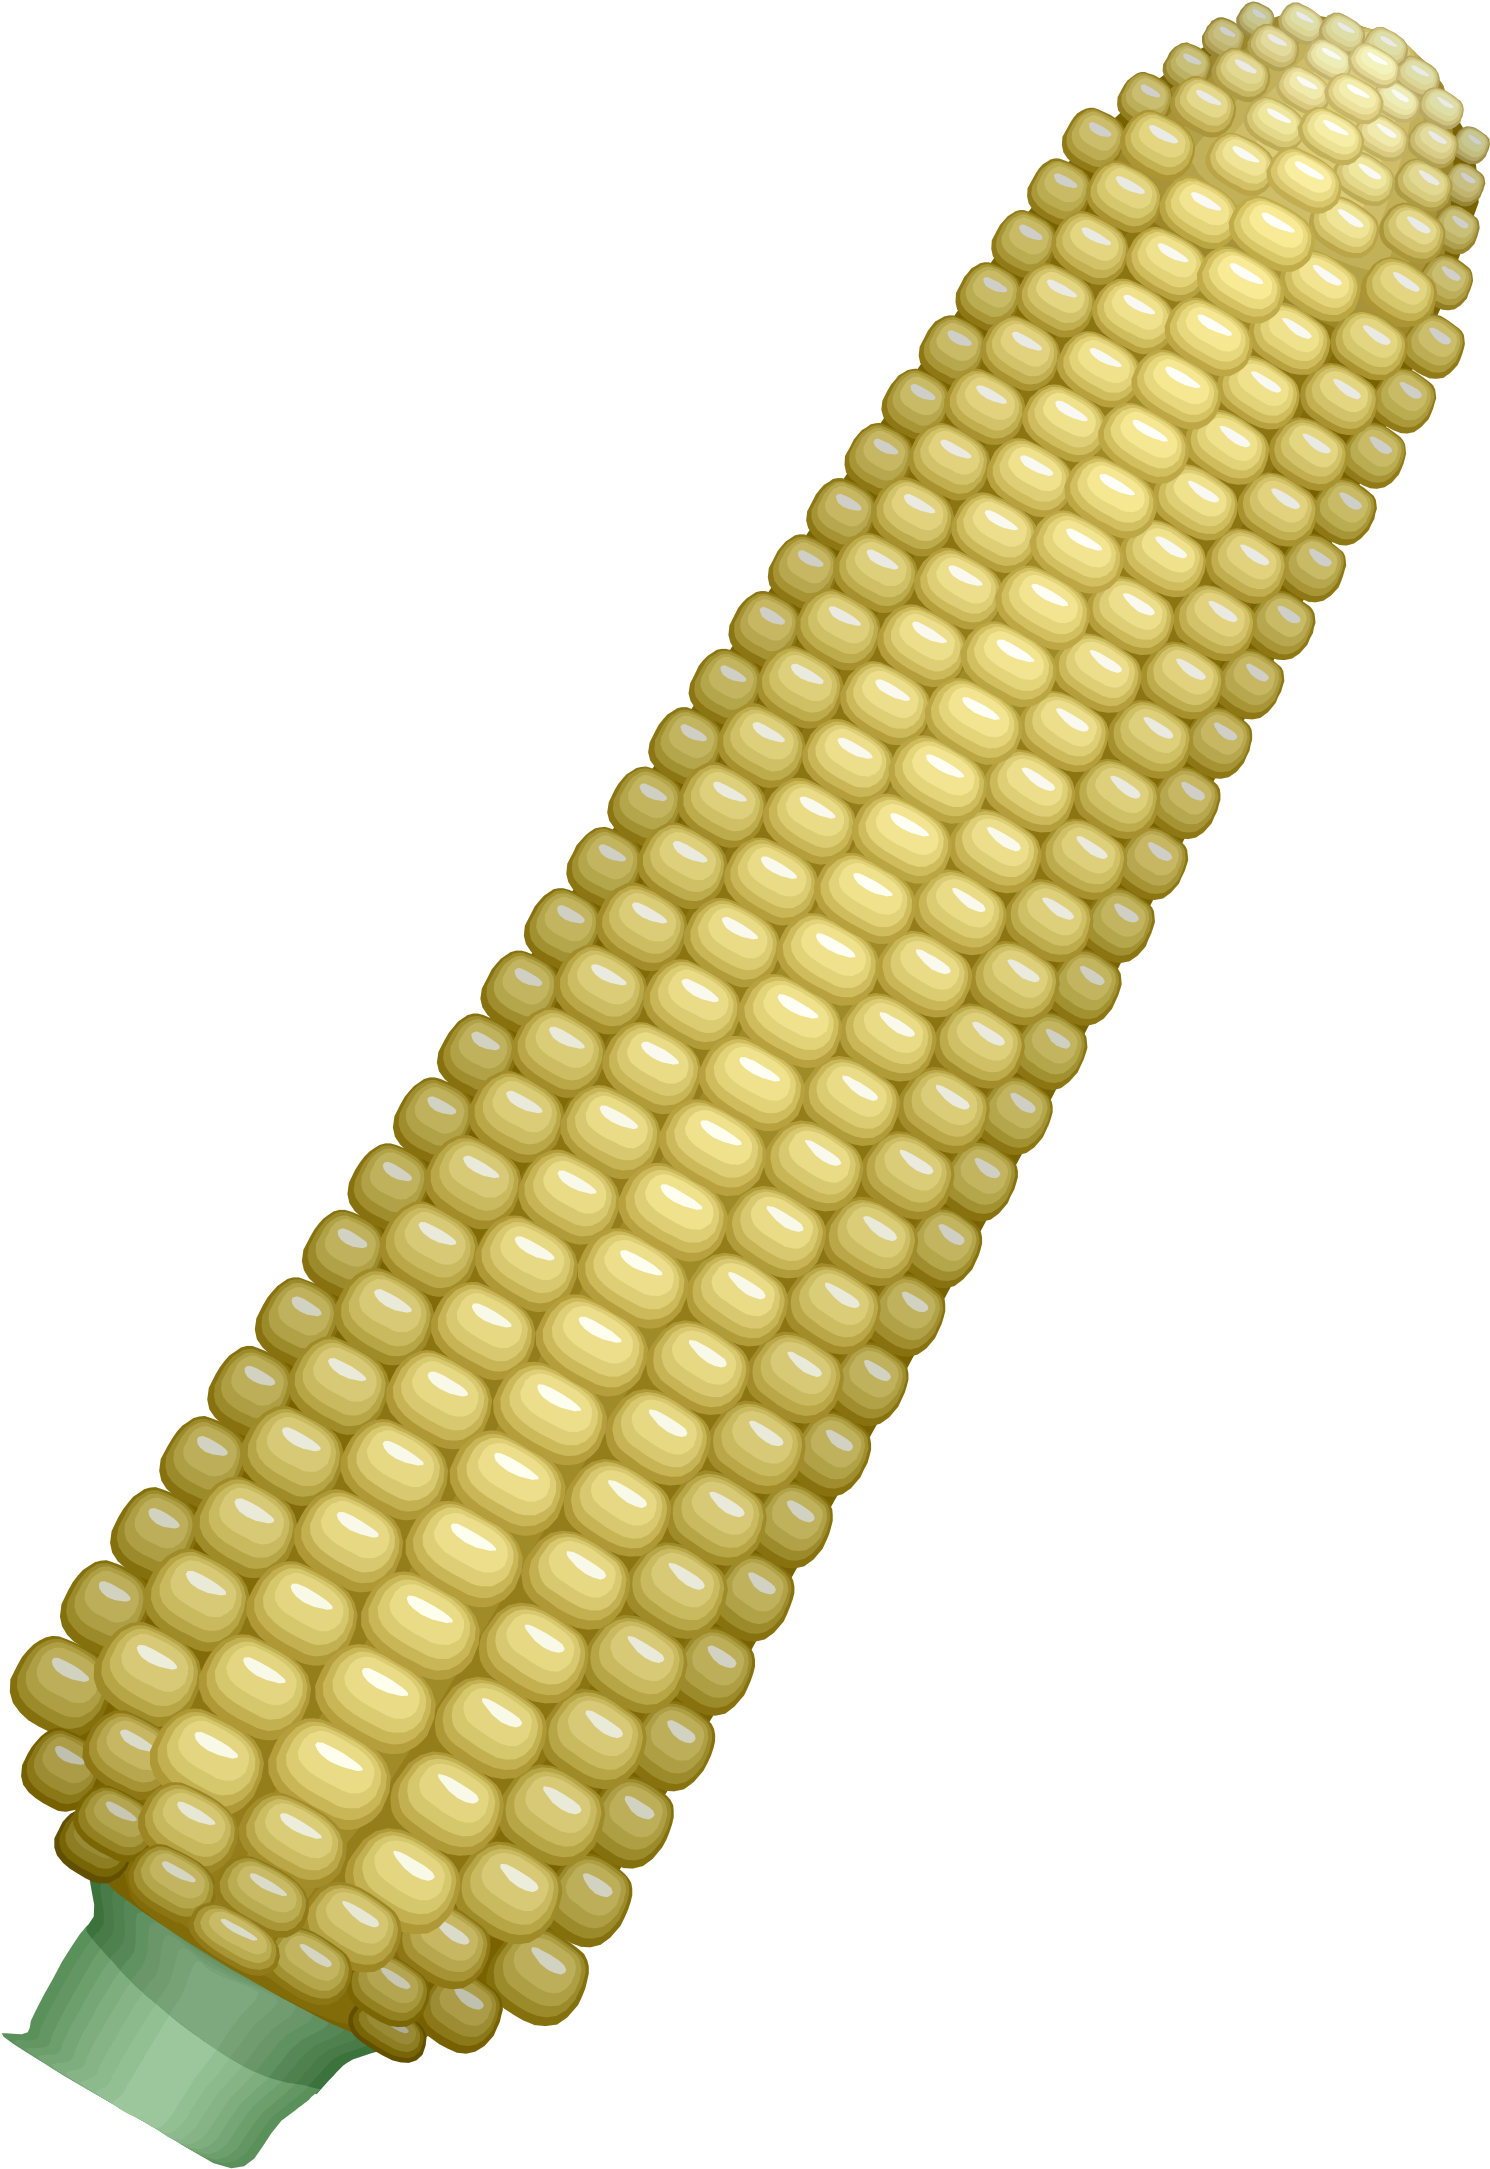 Free Photos > Vector Images > Ear Of Corn Vector Clipart - Corncob (1803x2400)